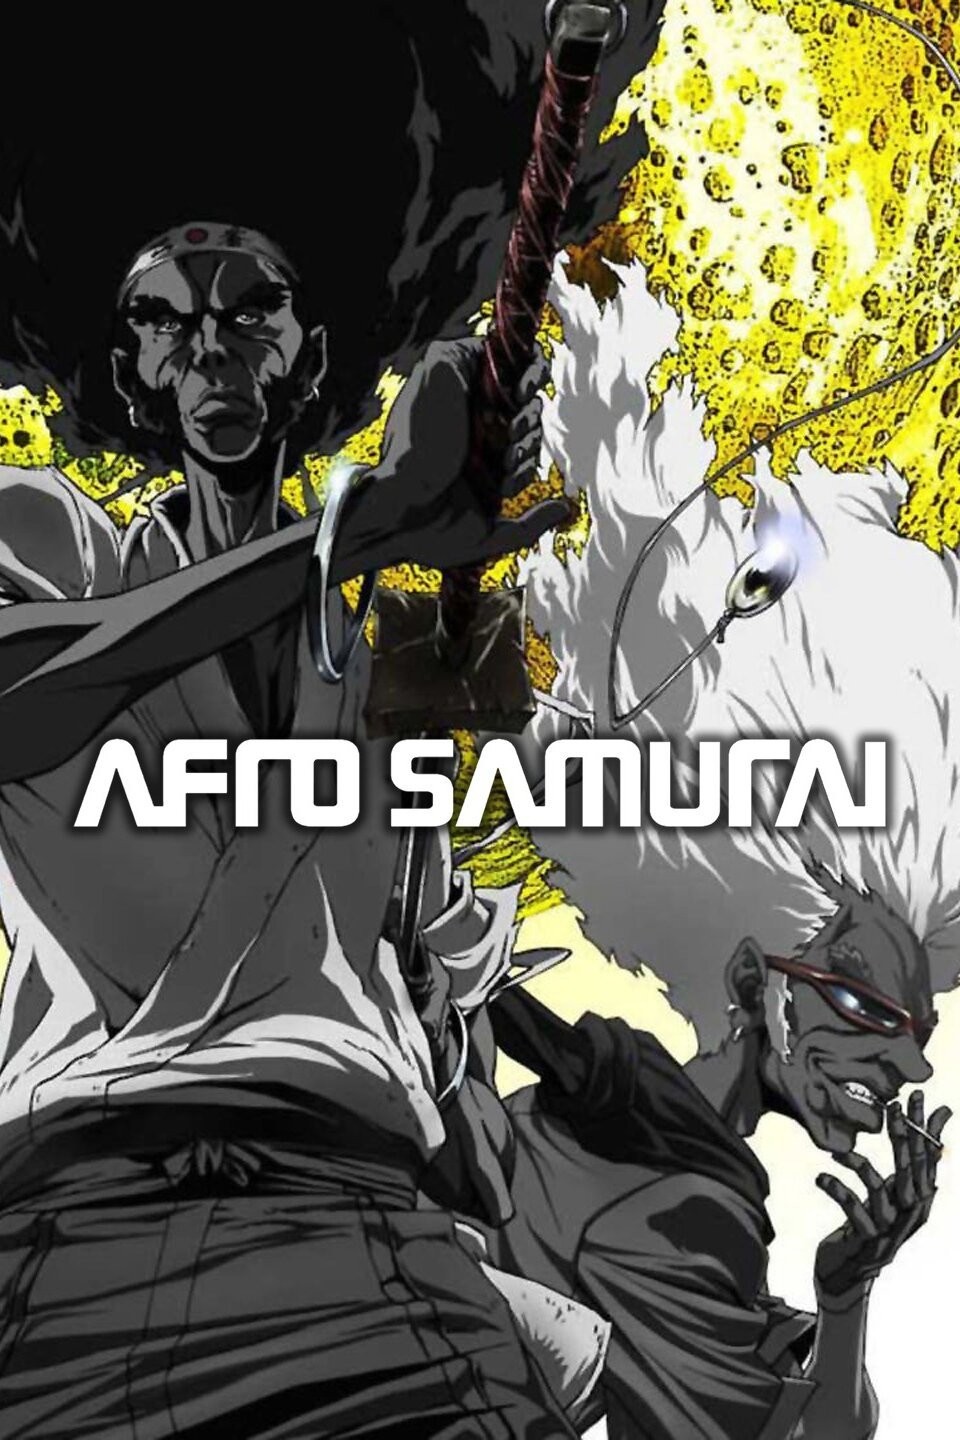 Afro Samurai: Resurrection (movie) - Anime News Network